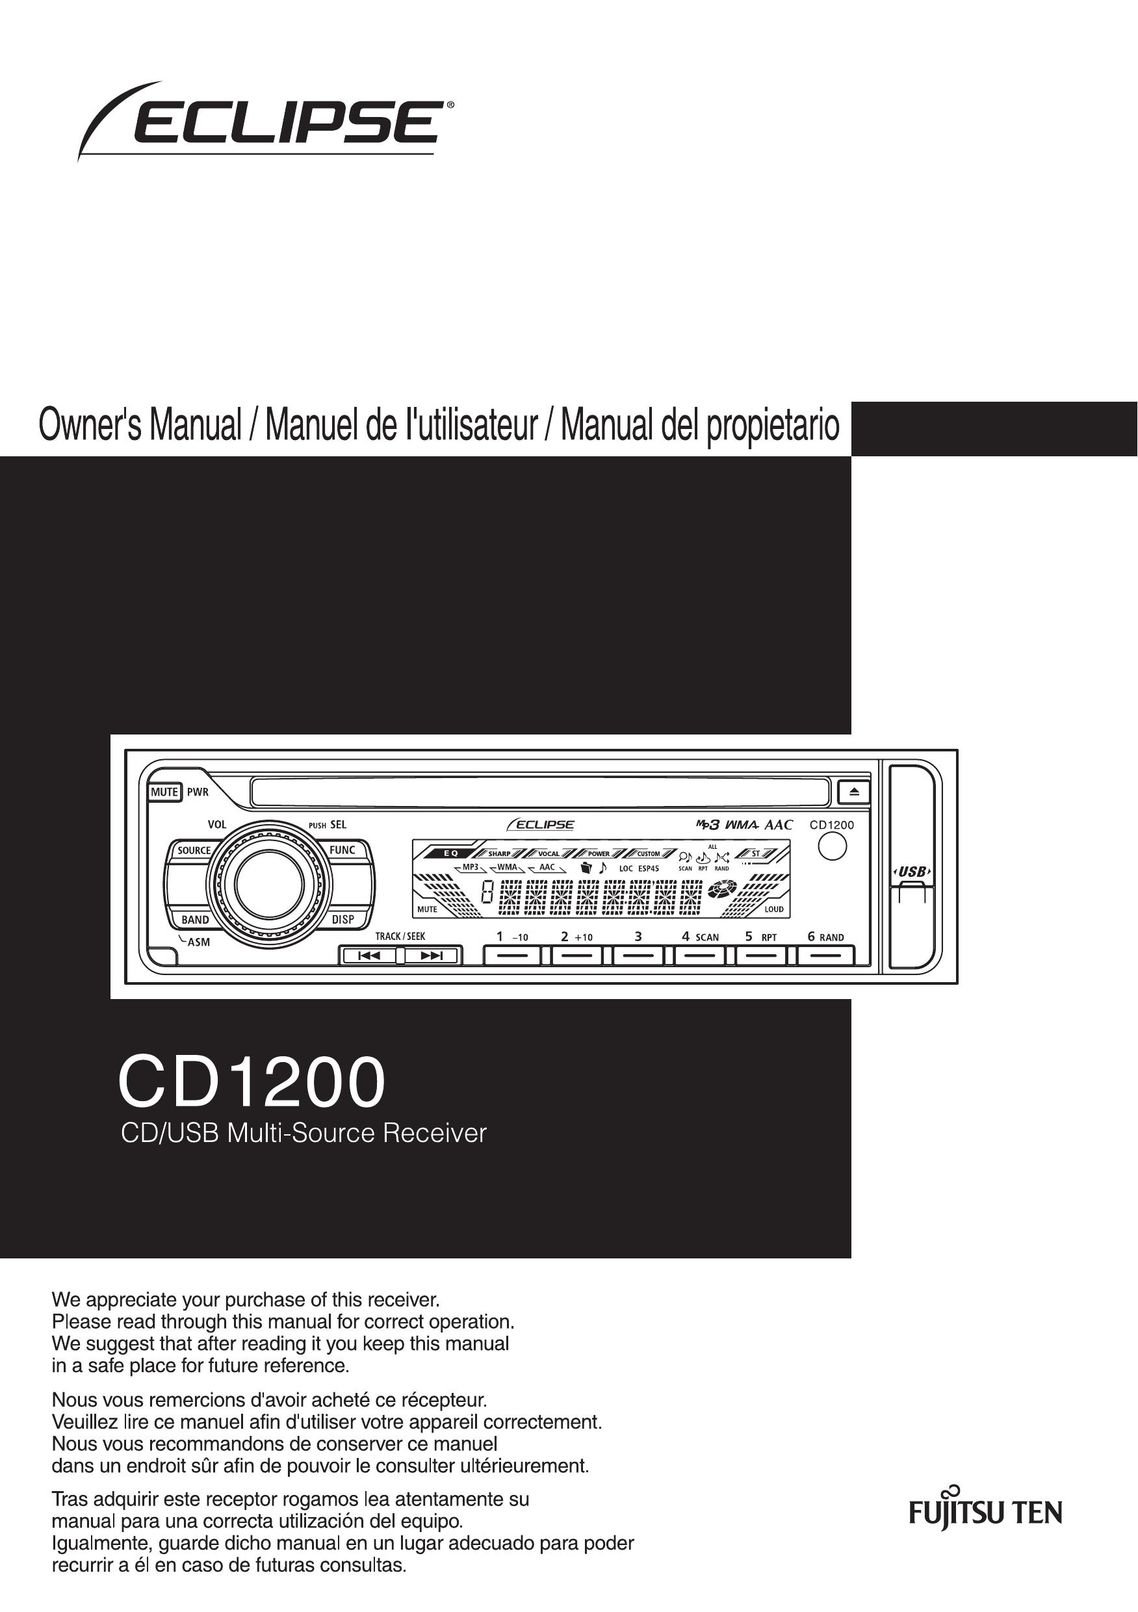 Eclipse - Fujitsu Ten CD1200 Car Stereo System User Manual